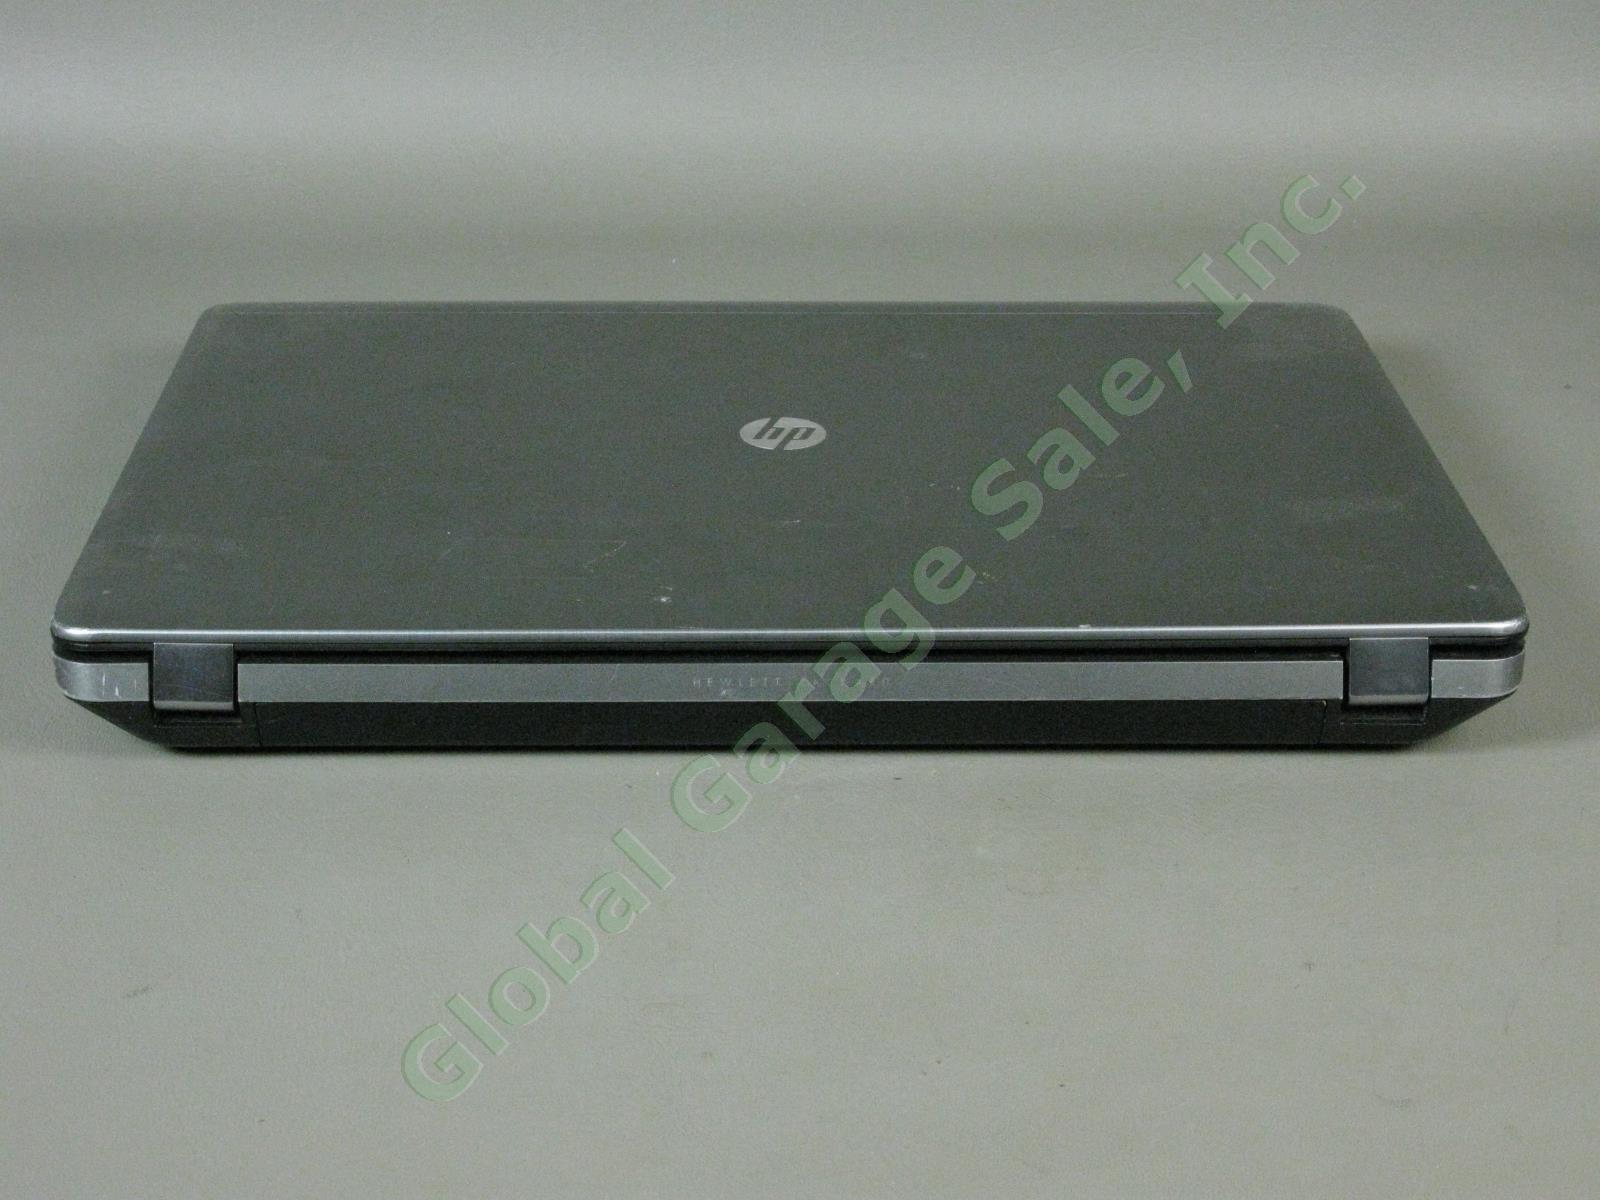 HP ProBook 4540s Laptop Intel i5 2.50GHz 294GB 4GB RAM Windows 10 Pro Refurb 5